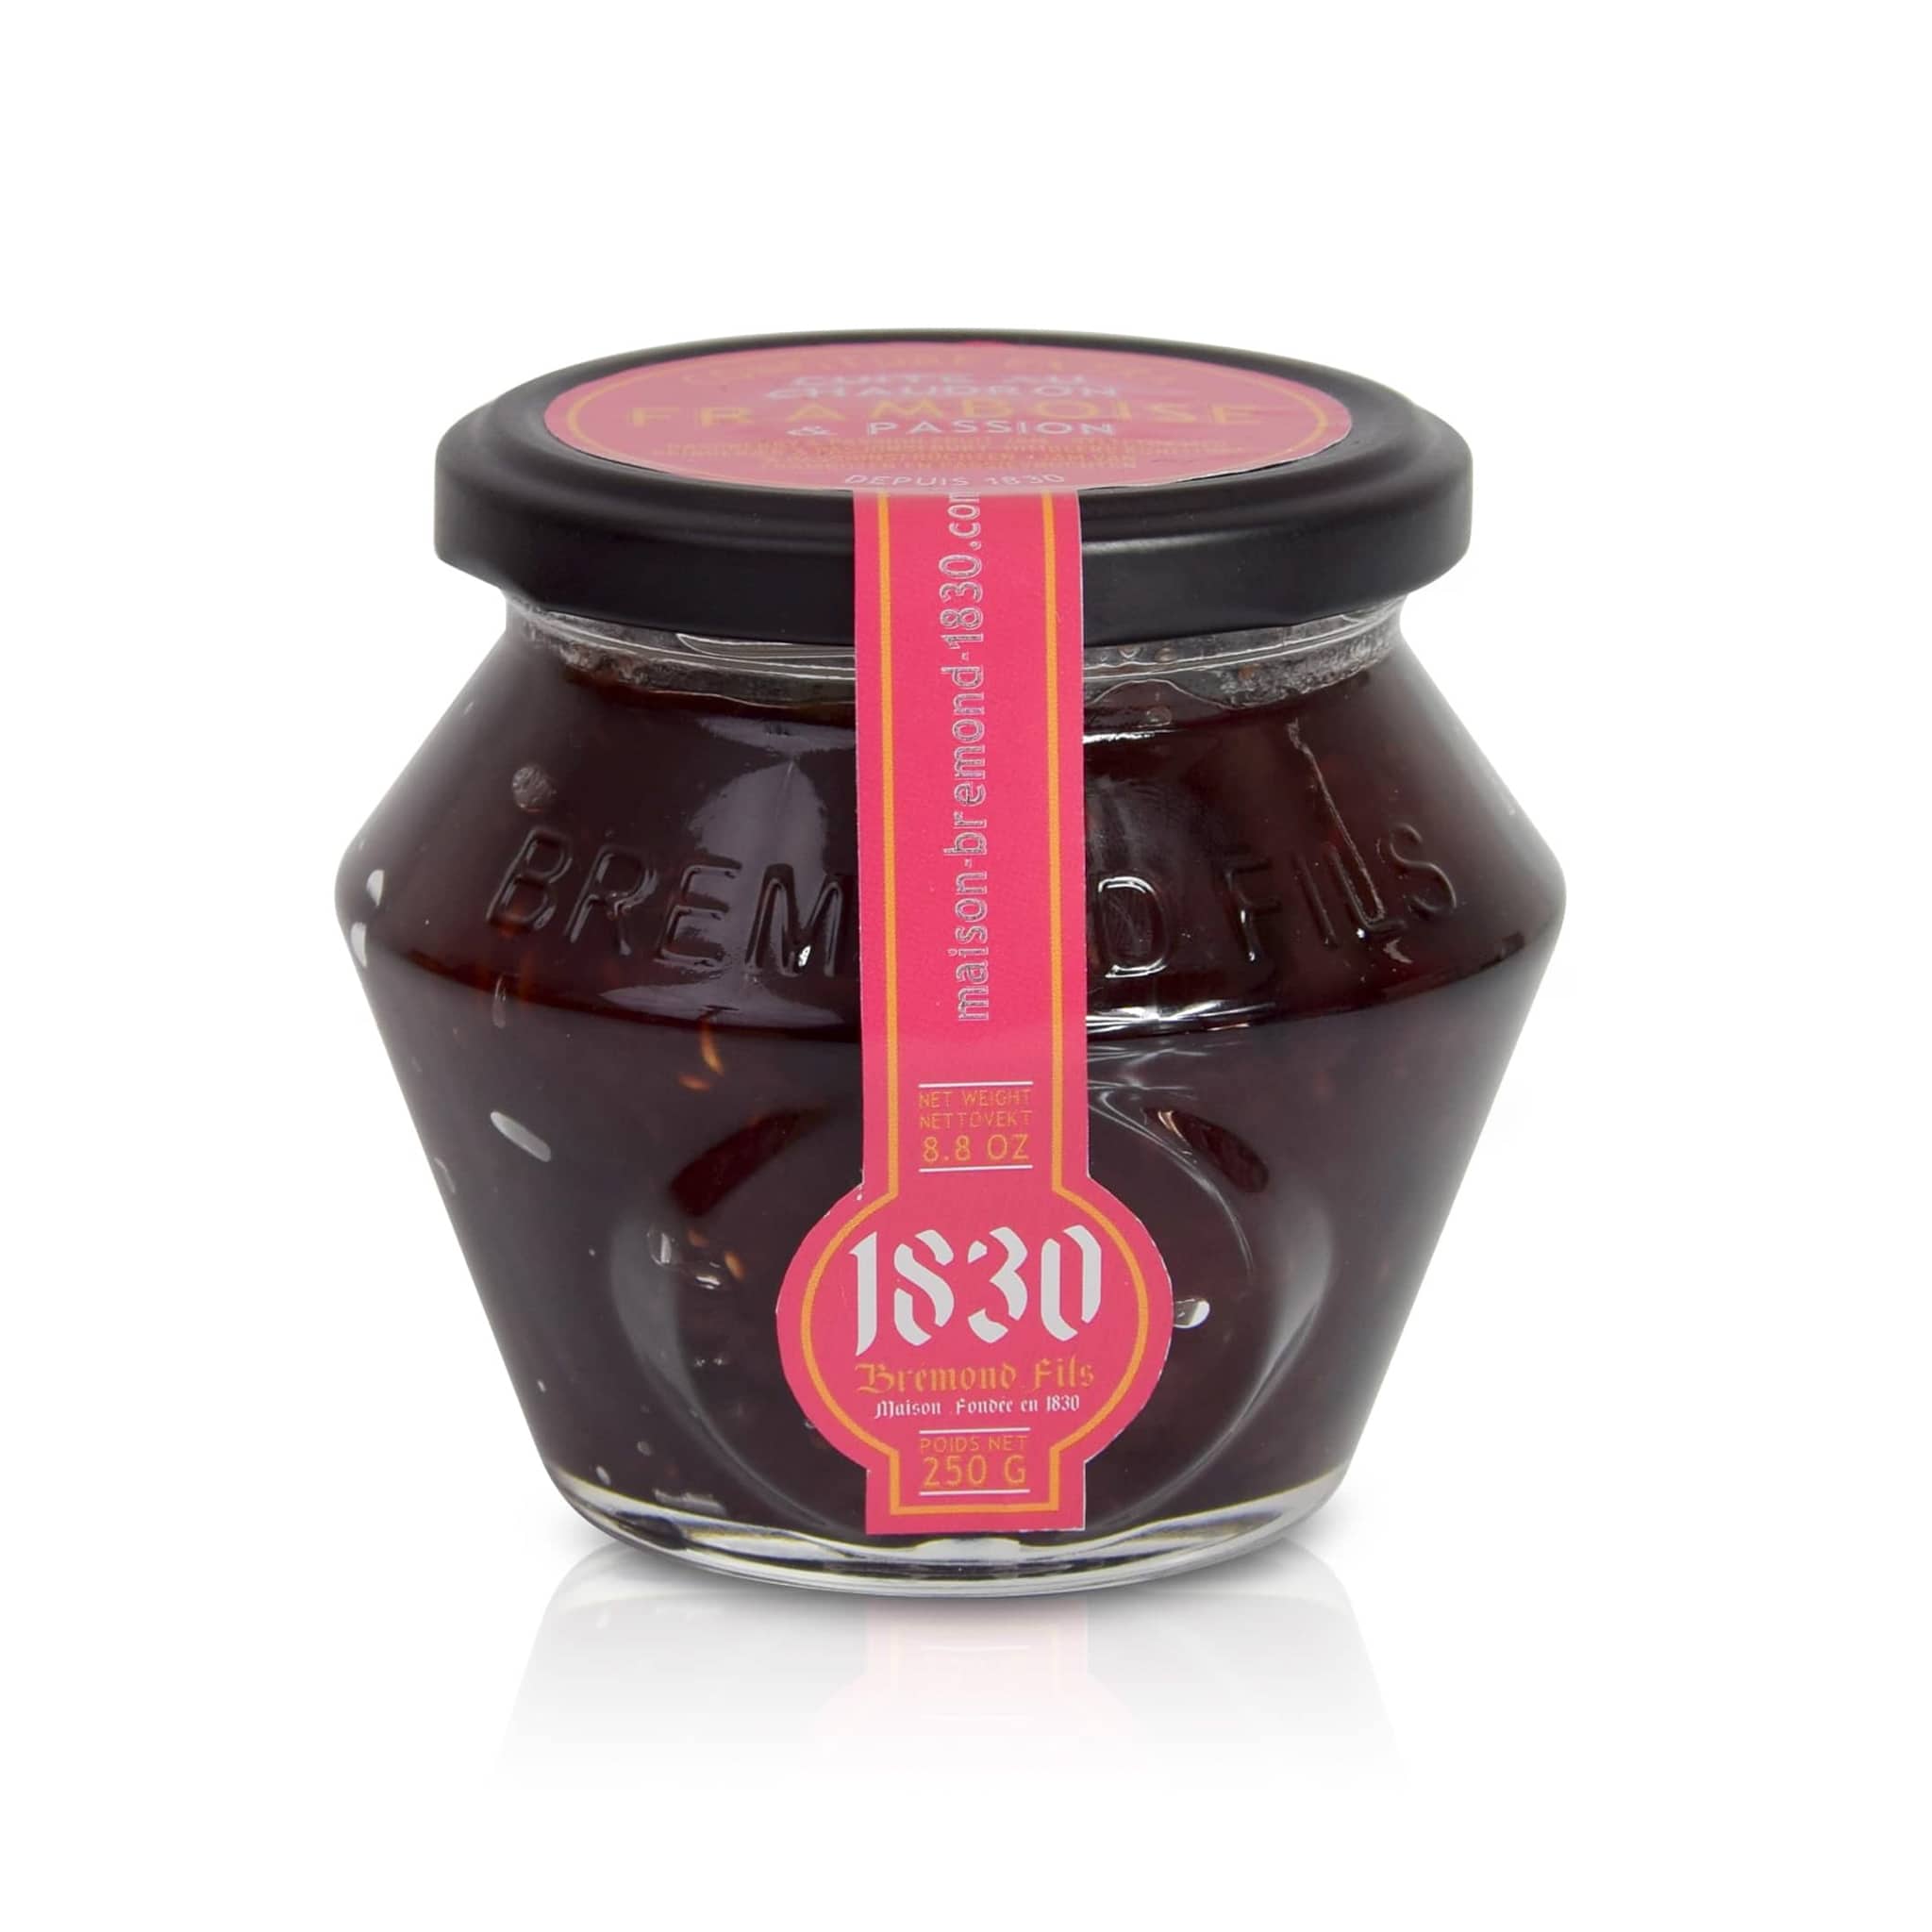 Maison Bremond Raspberry & Passion Fruit Jam 250g